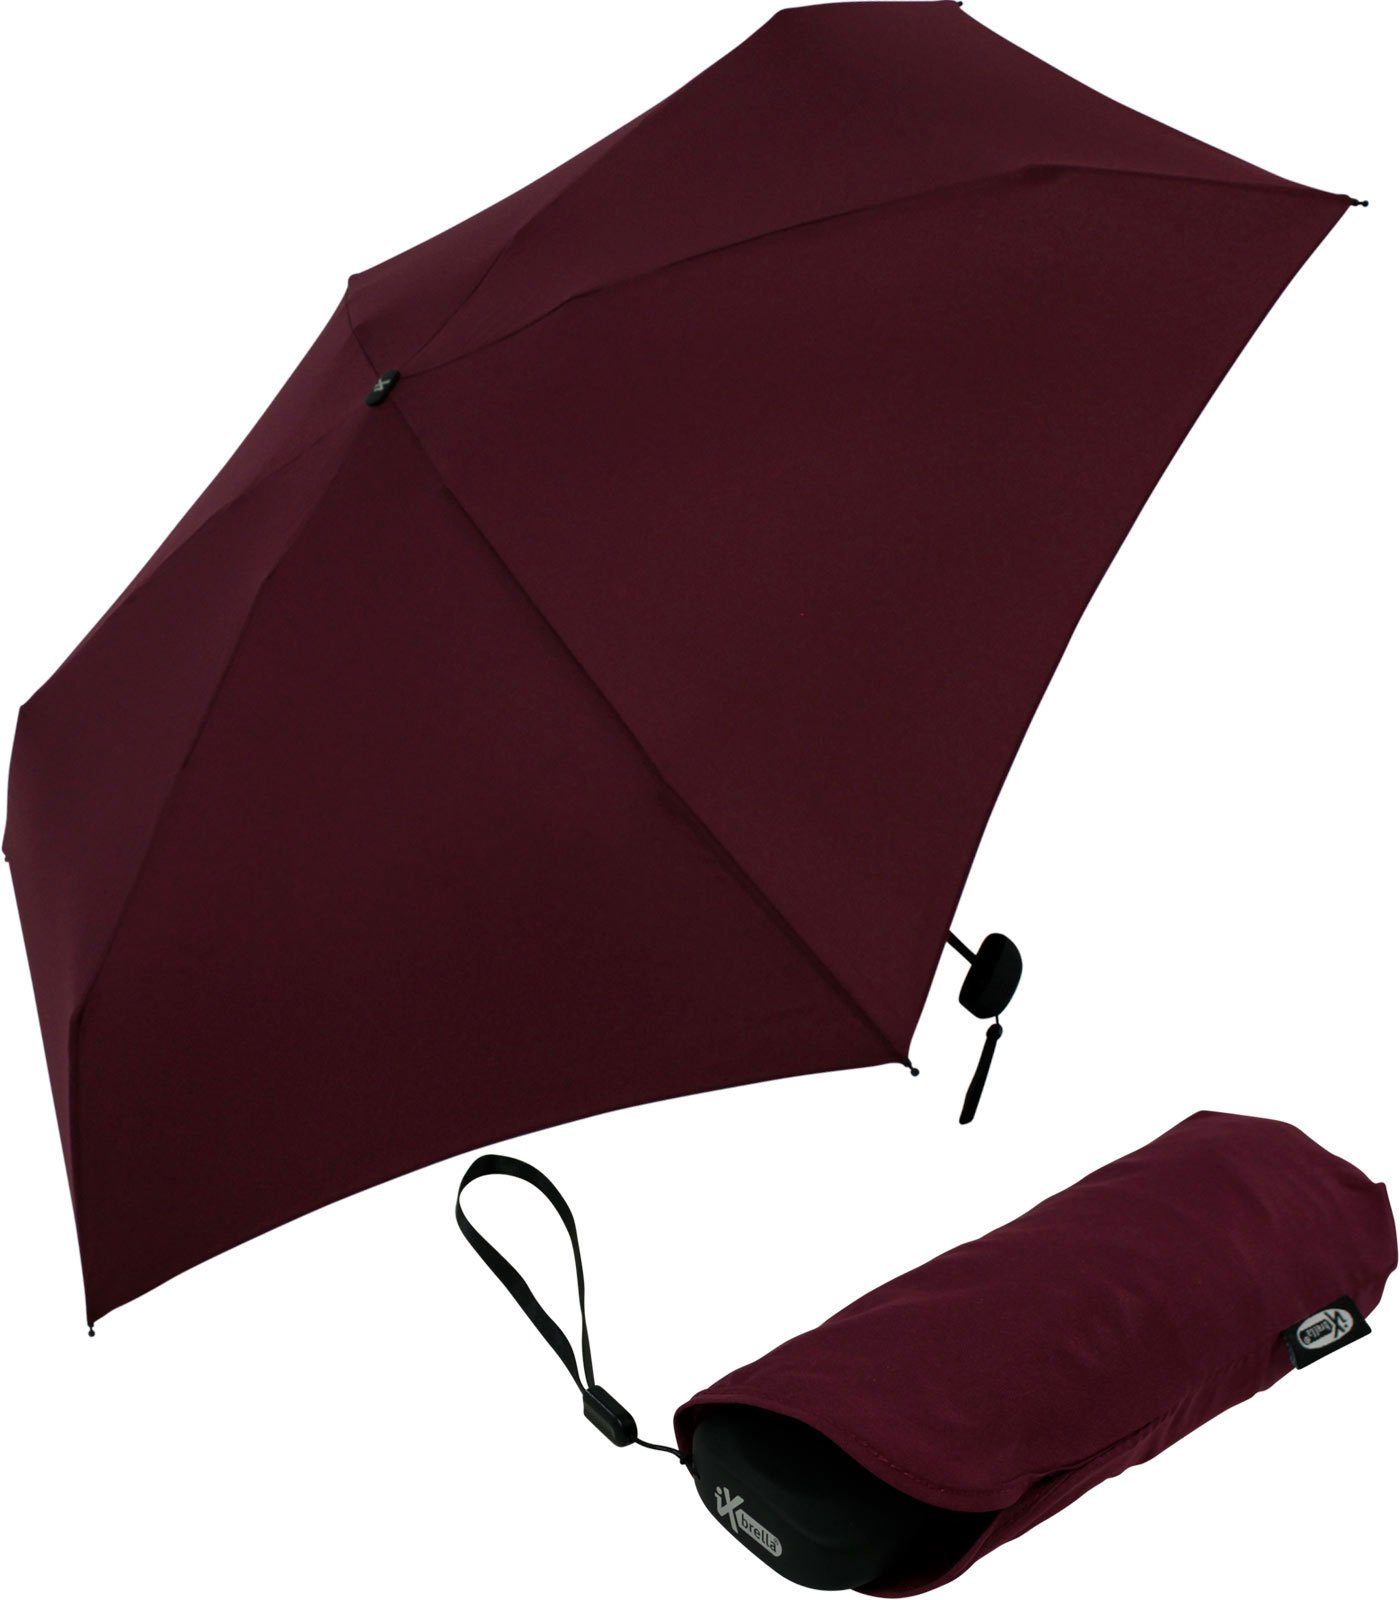 Mini mit cm großem, Taschenregenschirm iX-brella Schirm Super bordeaux kleiner 94cm 18 super-mini